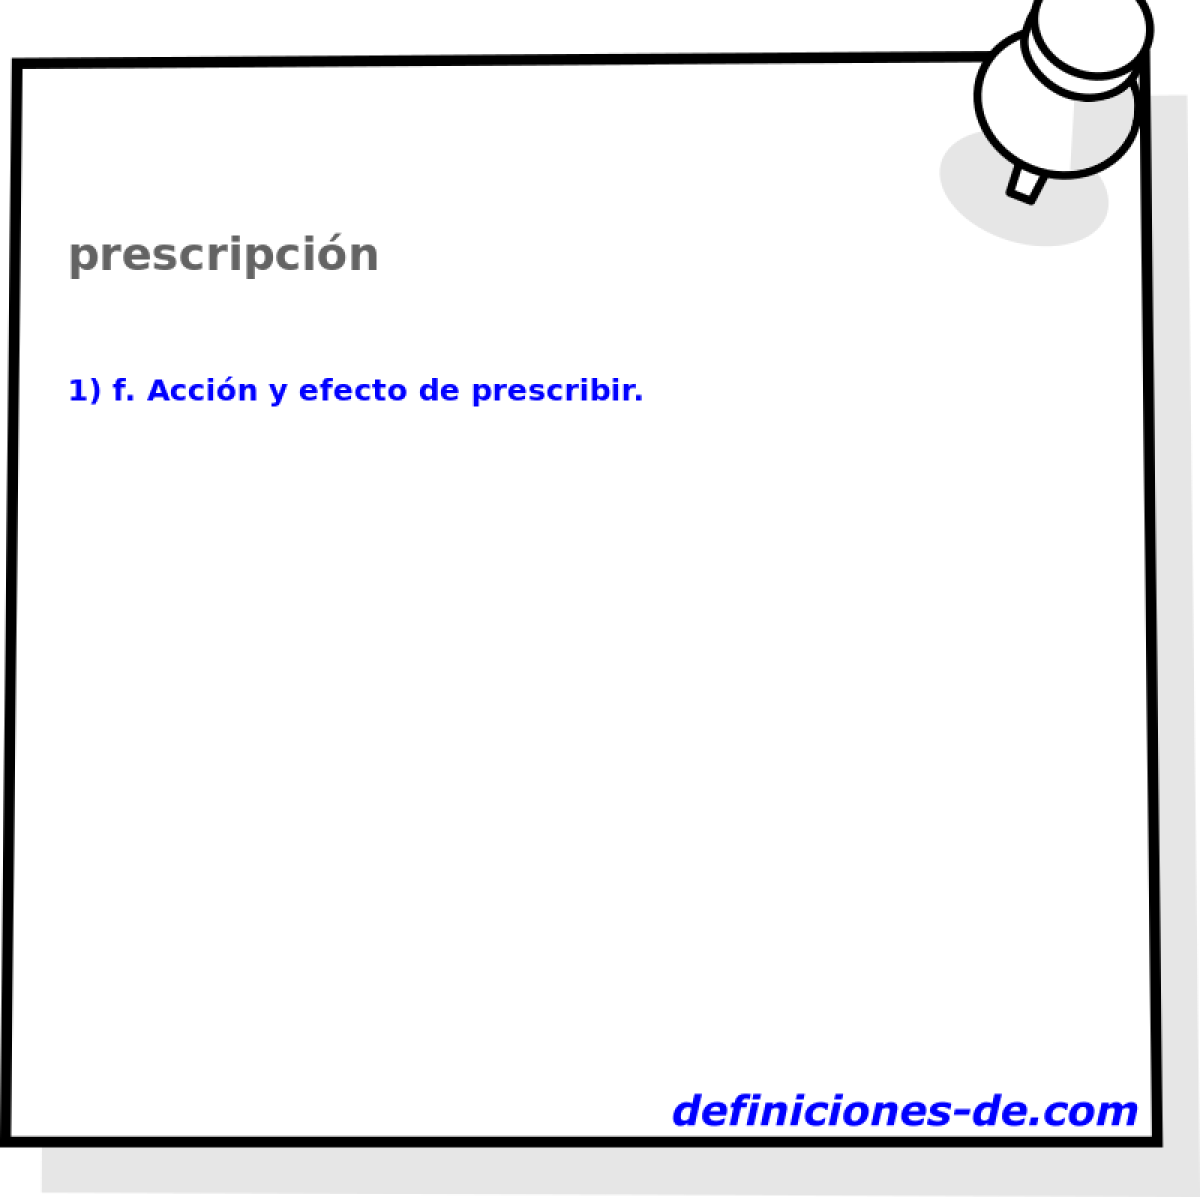 prescripcin 